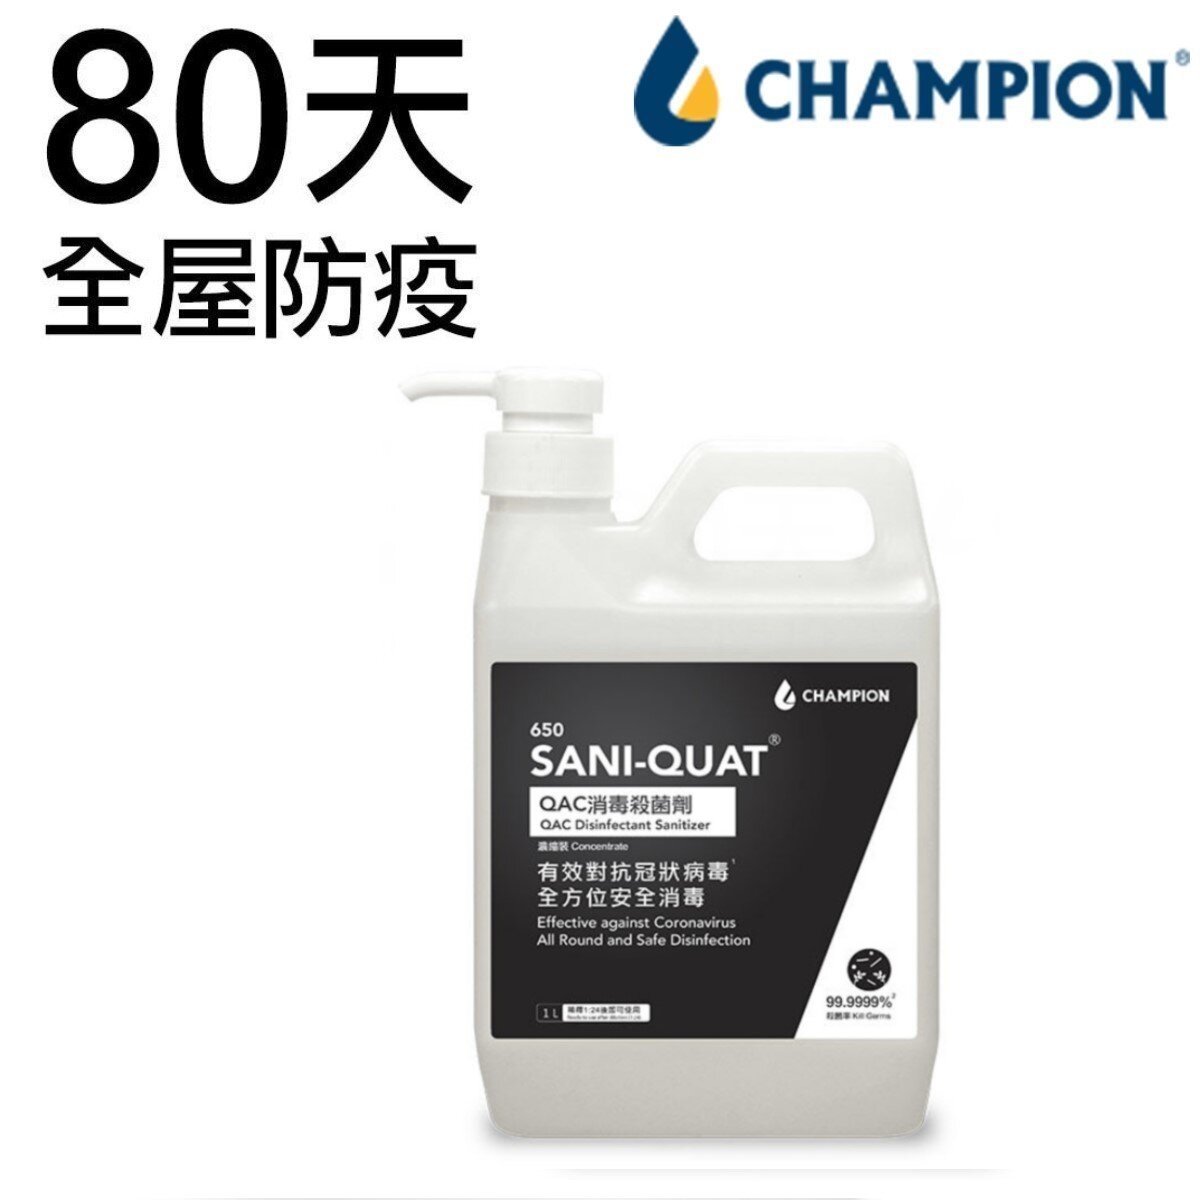 SANI-QUAT Household Disinfectant and Sanitizer Pack (Spray against Coronavirus - Safe Formula)